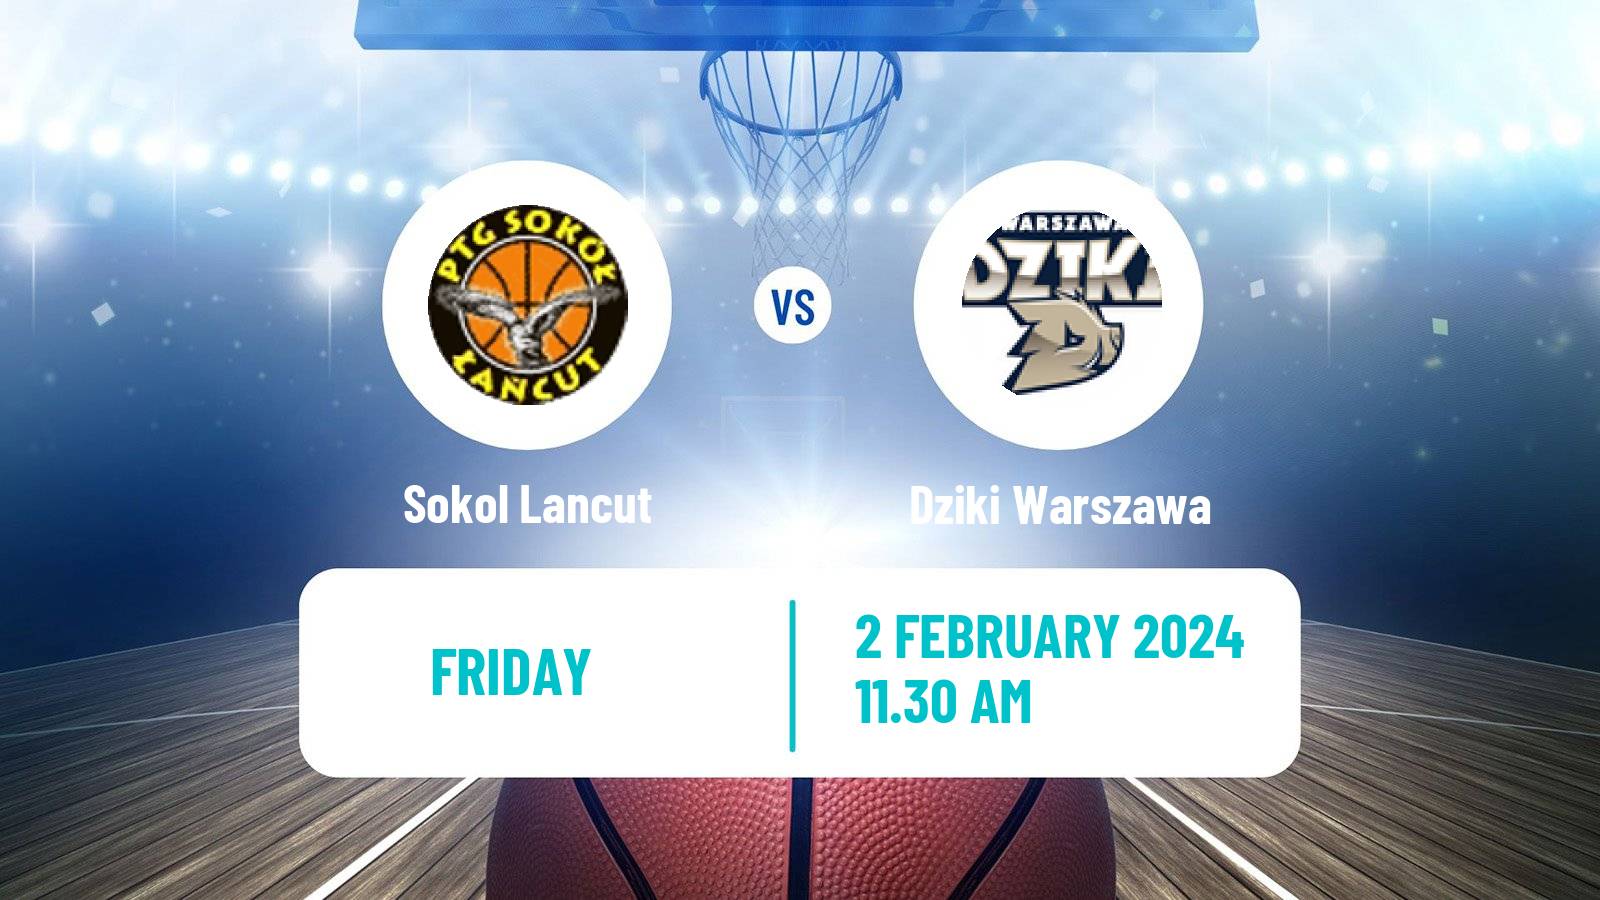 Basketball Polish Basket Liga Sokol Lancut - Dziki Warszawa